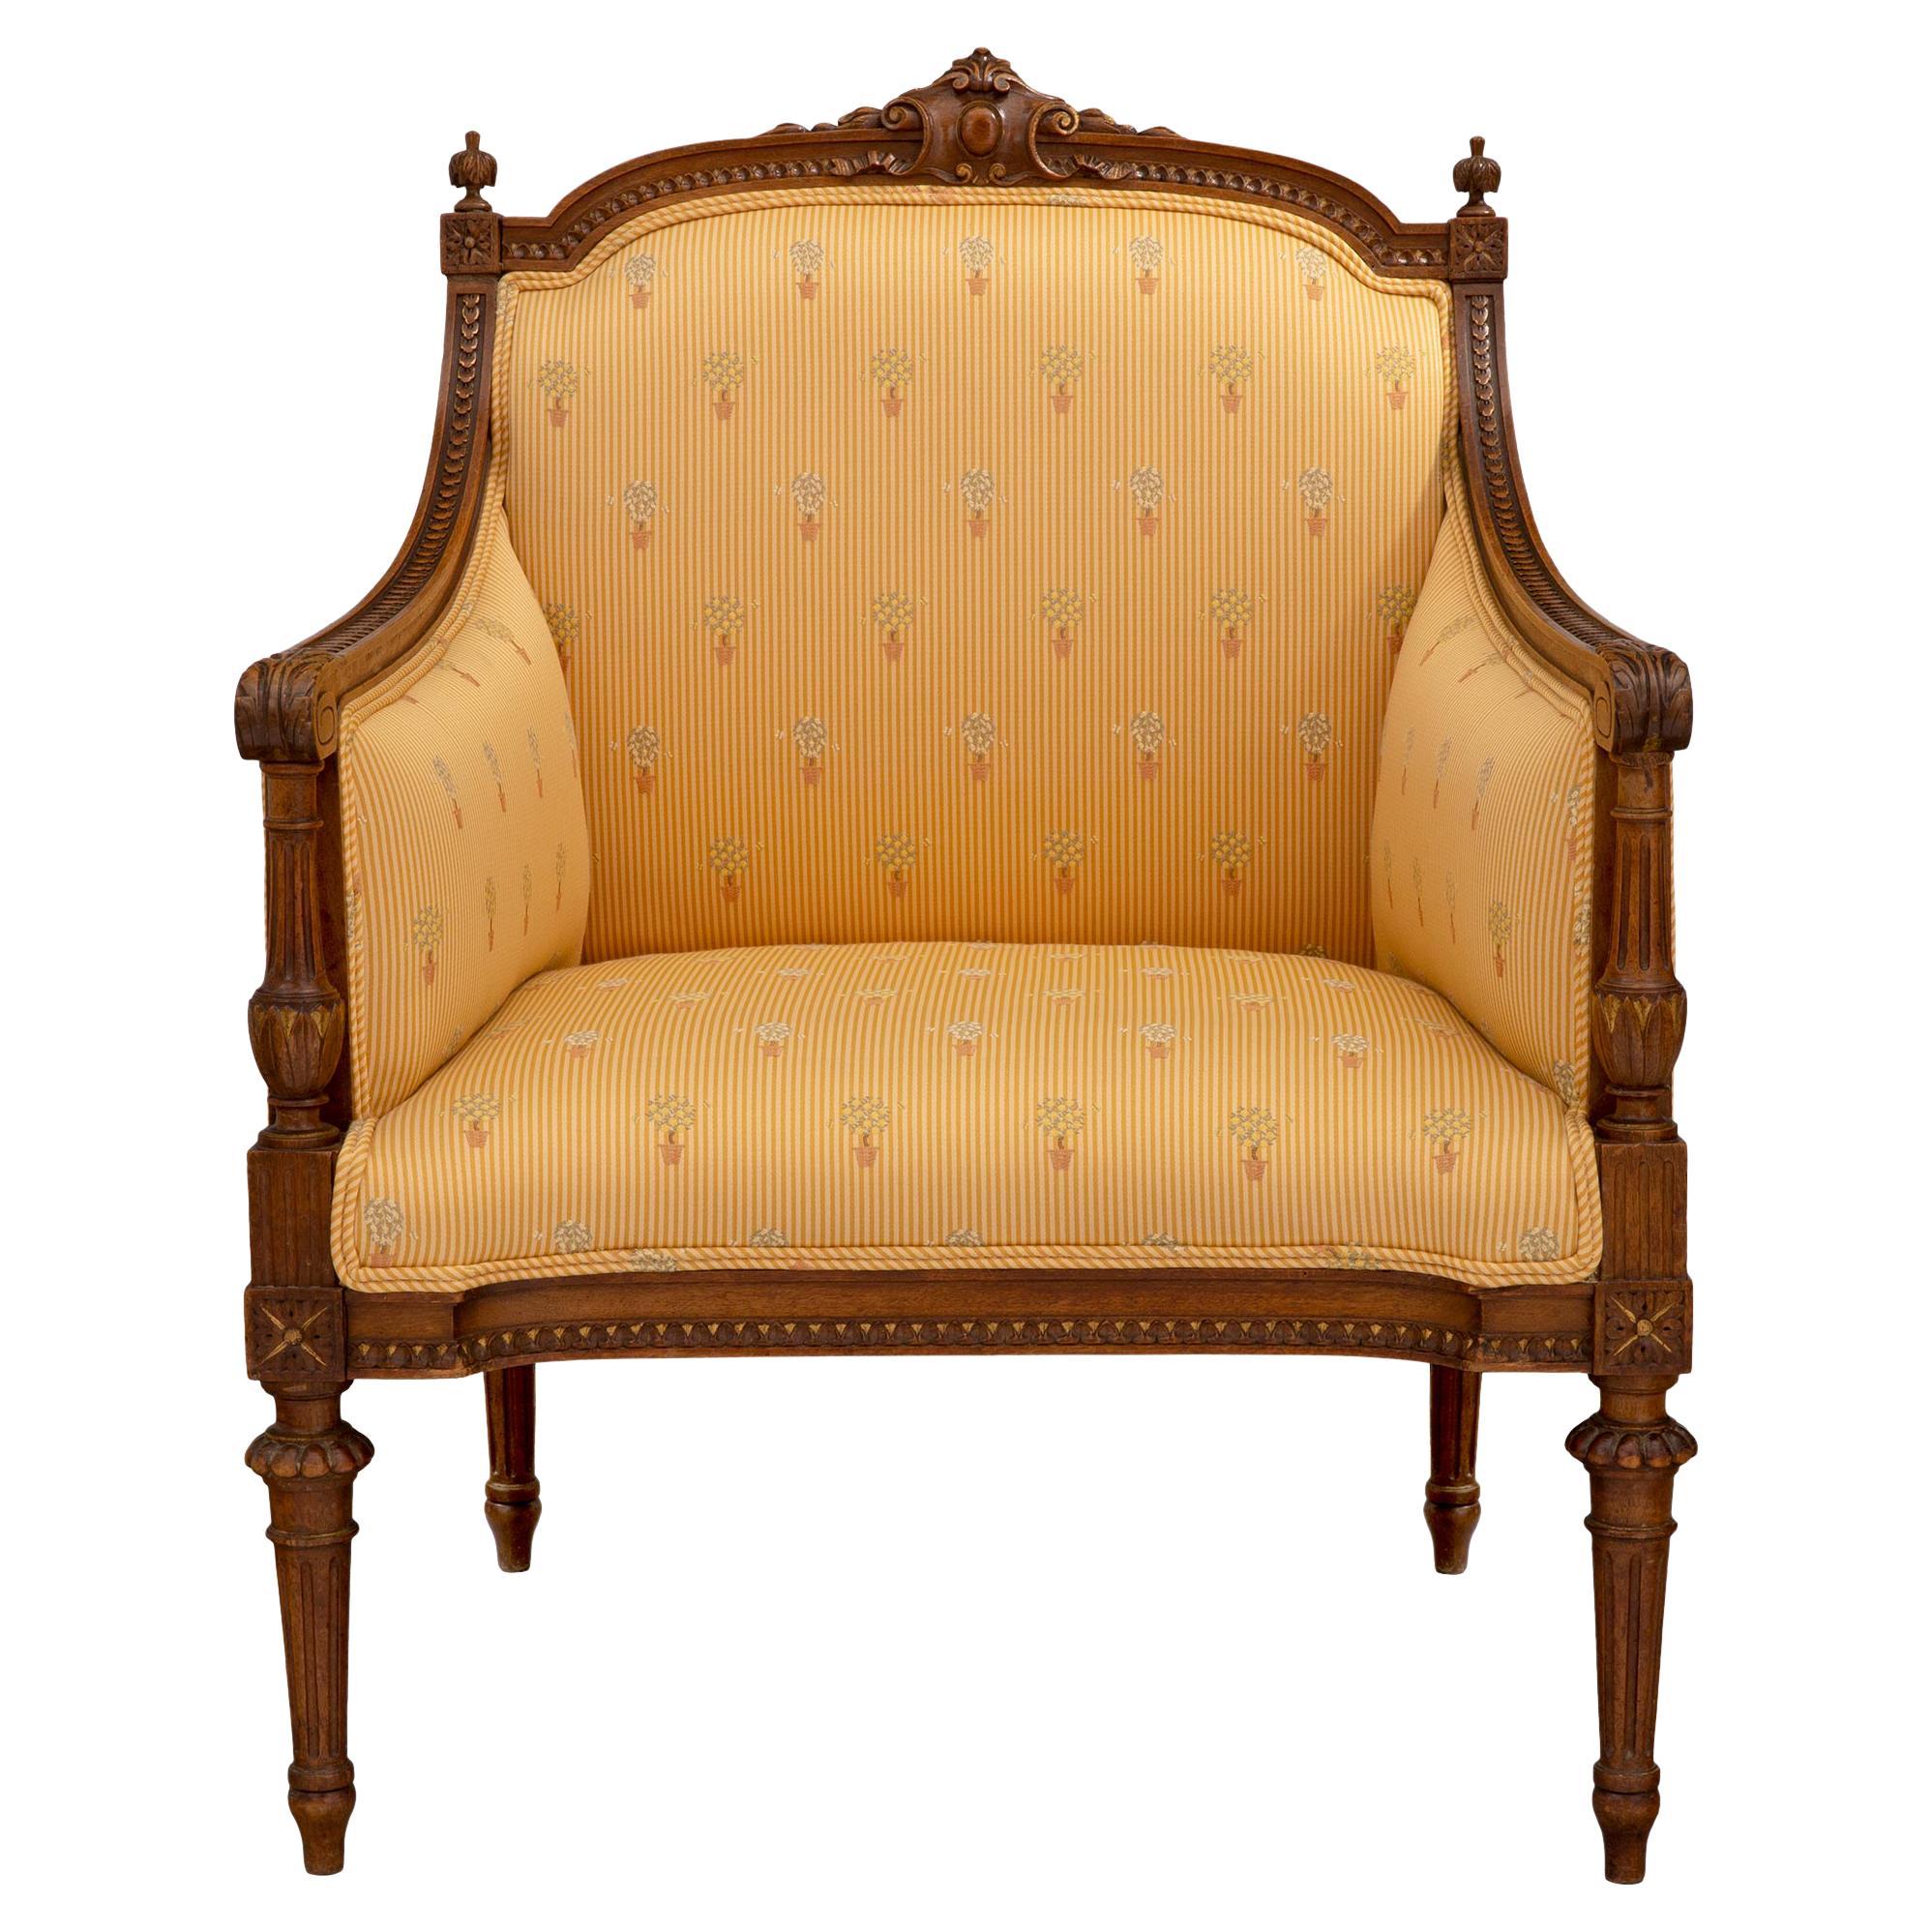 Marquise-Sessel aus massivem Eichenholz im Louis-XVI-Stil, 19. Jahrhundert